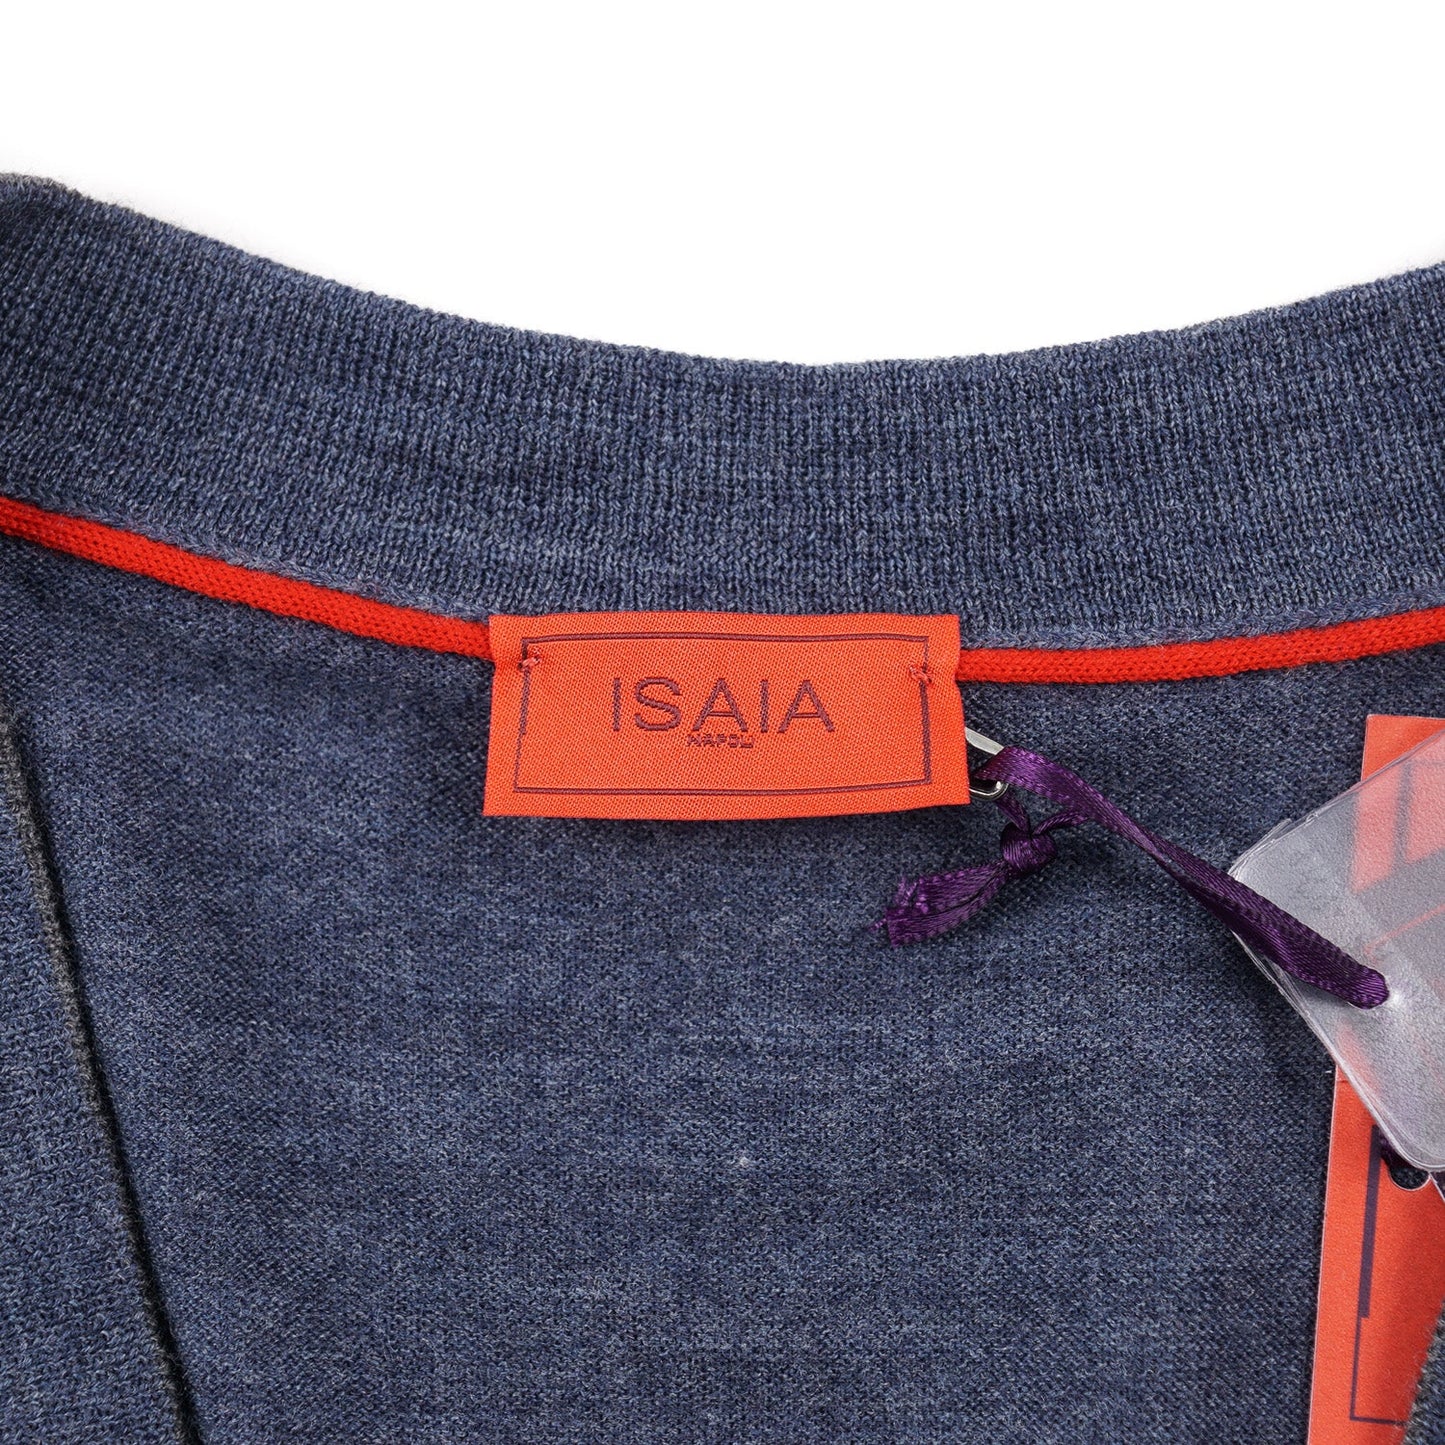 Isaia Superfine Merino Wool Cardigan Sweater - Top Shelf Apparel